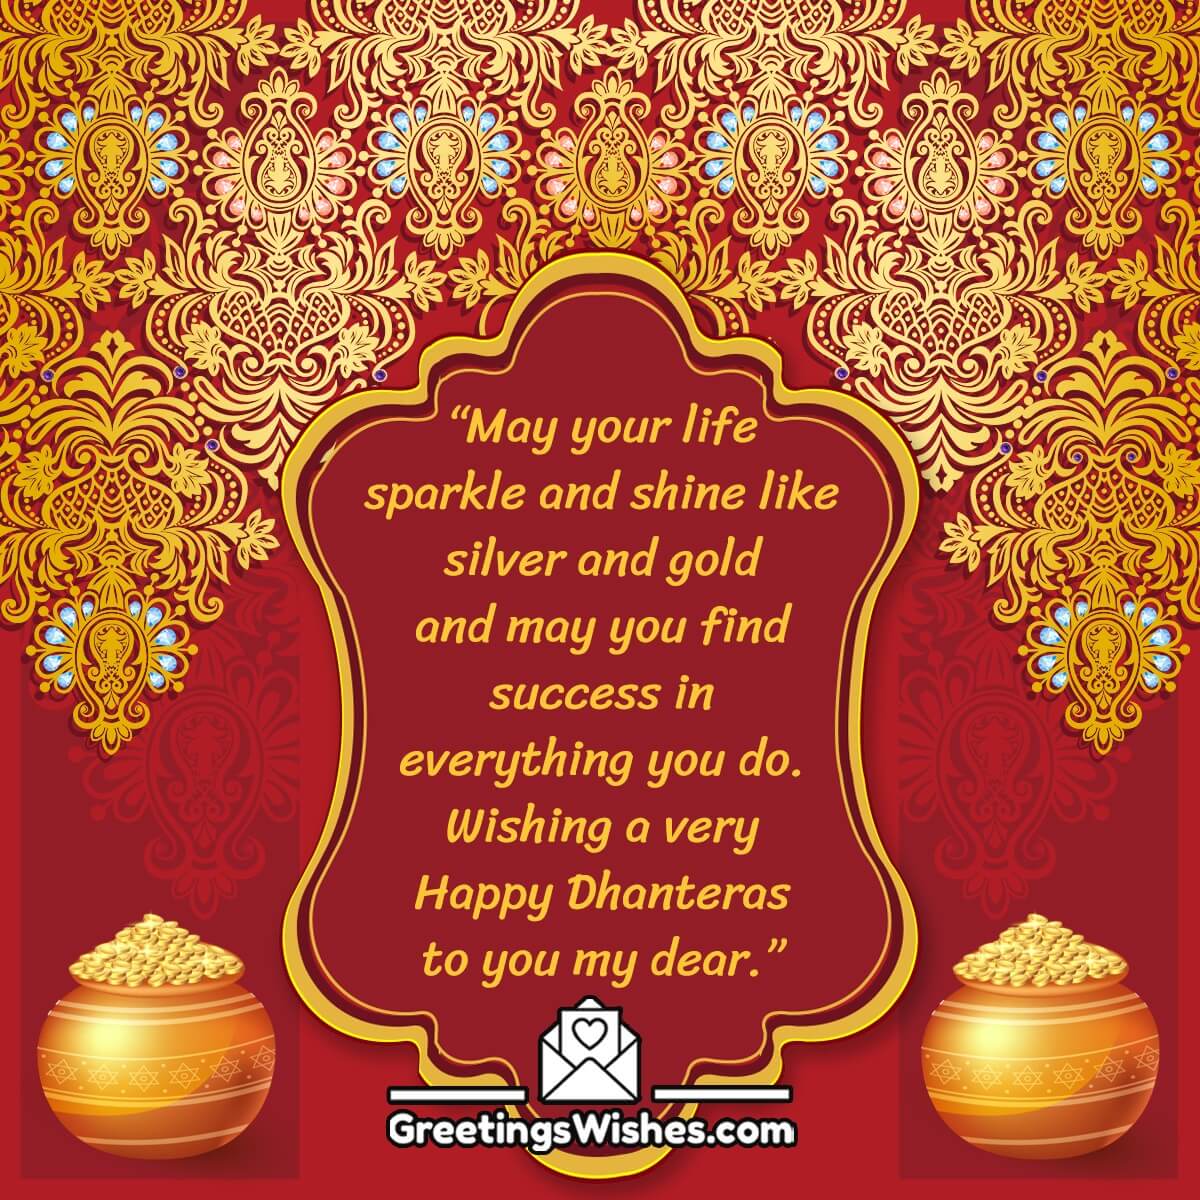 Wishing A Very Happy Dhanteras